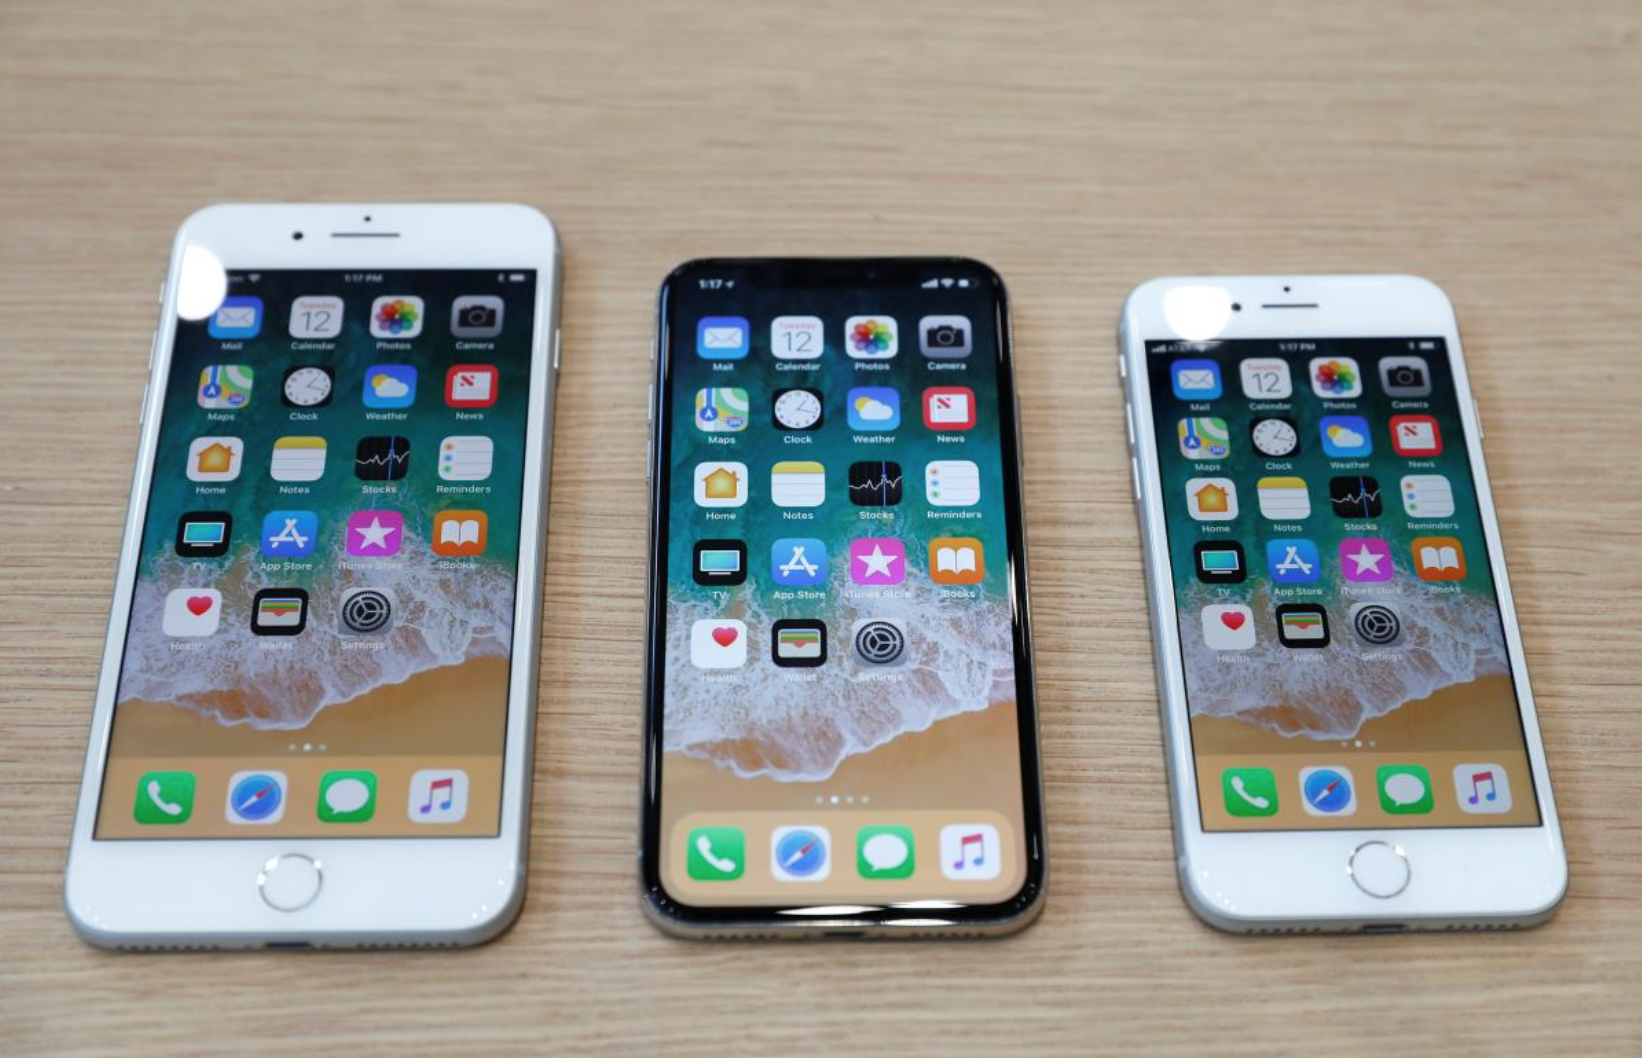 South Korea Consumer Group Files Criminal Complaint Against Apple CEO Over iPhone Slowdown